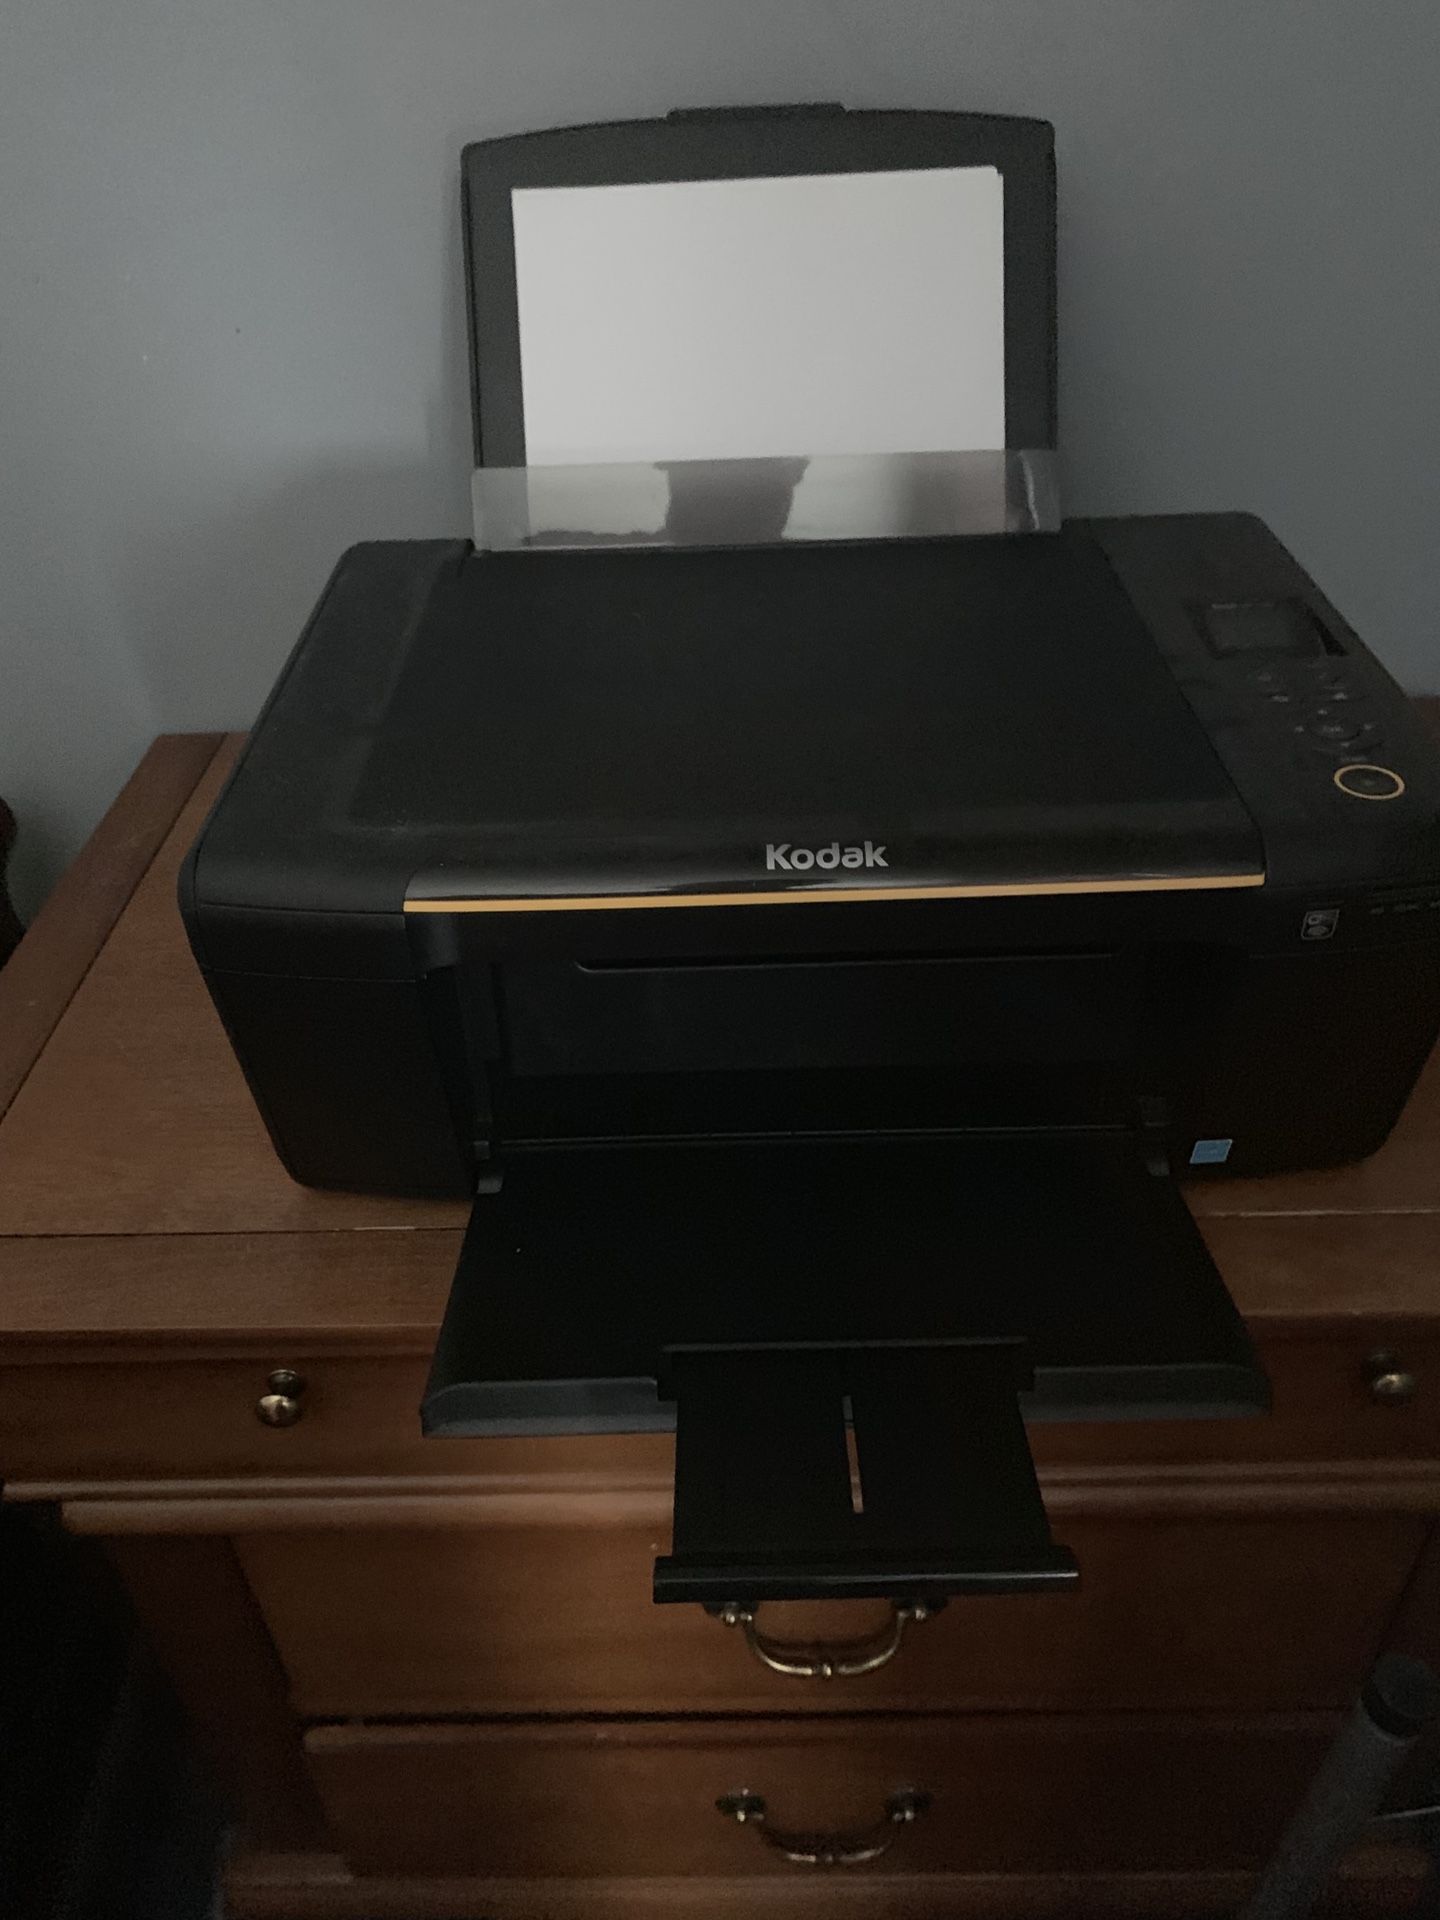 Kodak multifunction printer